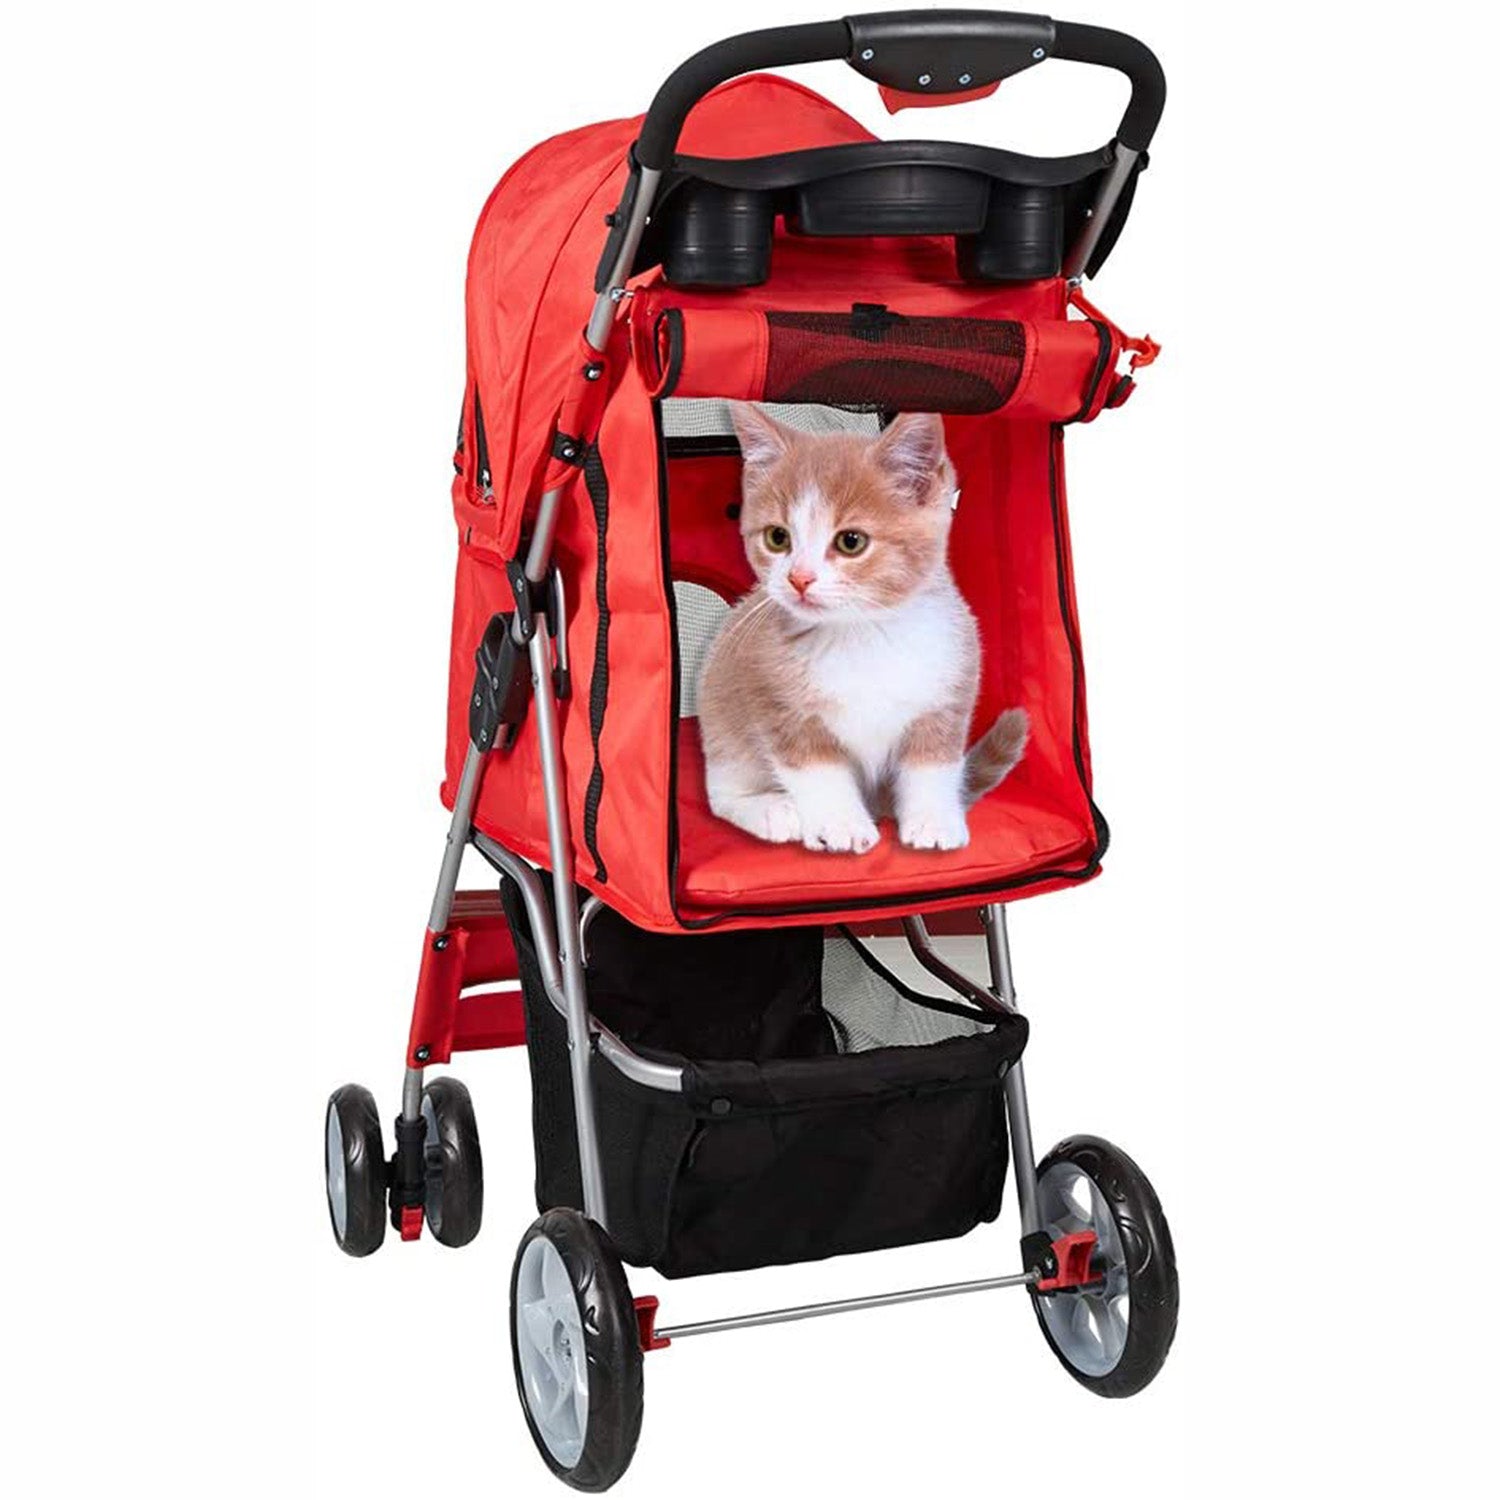 LUCKYERMORE Dog Pet Jogger Stroller Folding Travel Carrier Cart for Small Cat Puppy, 4 Wheels